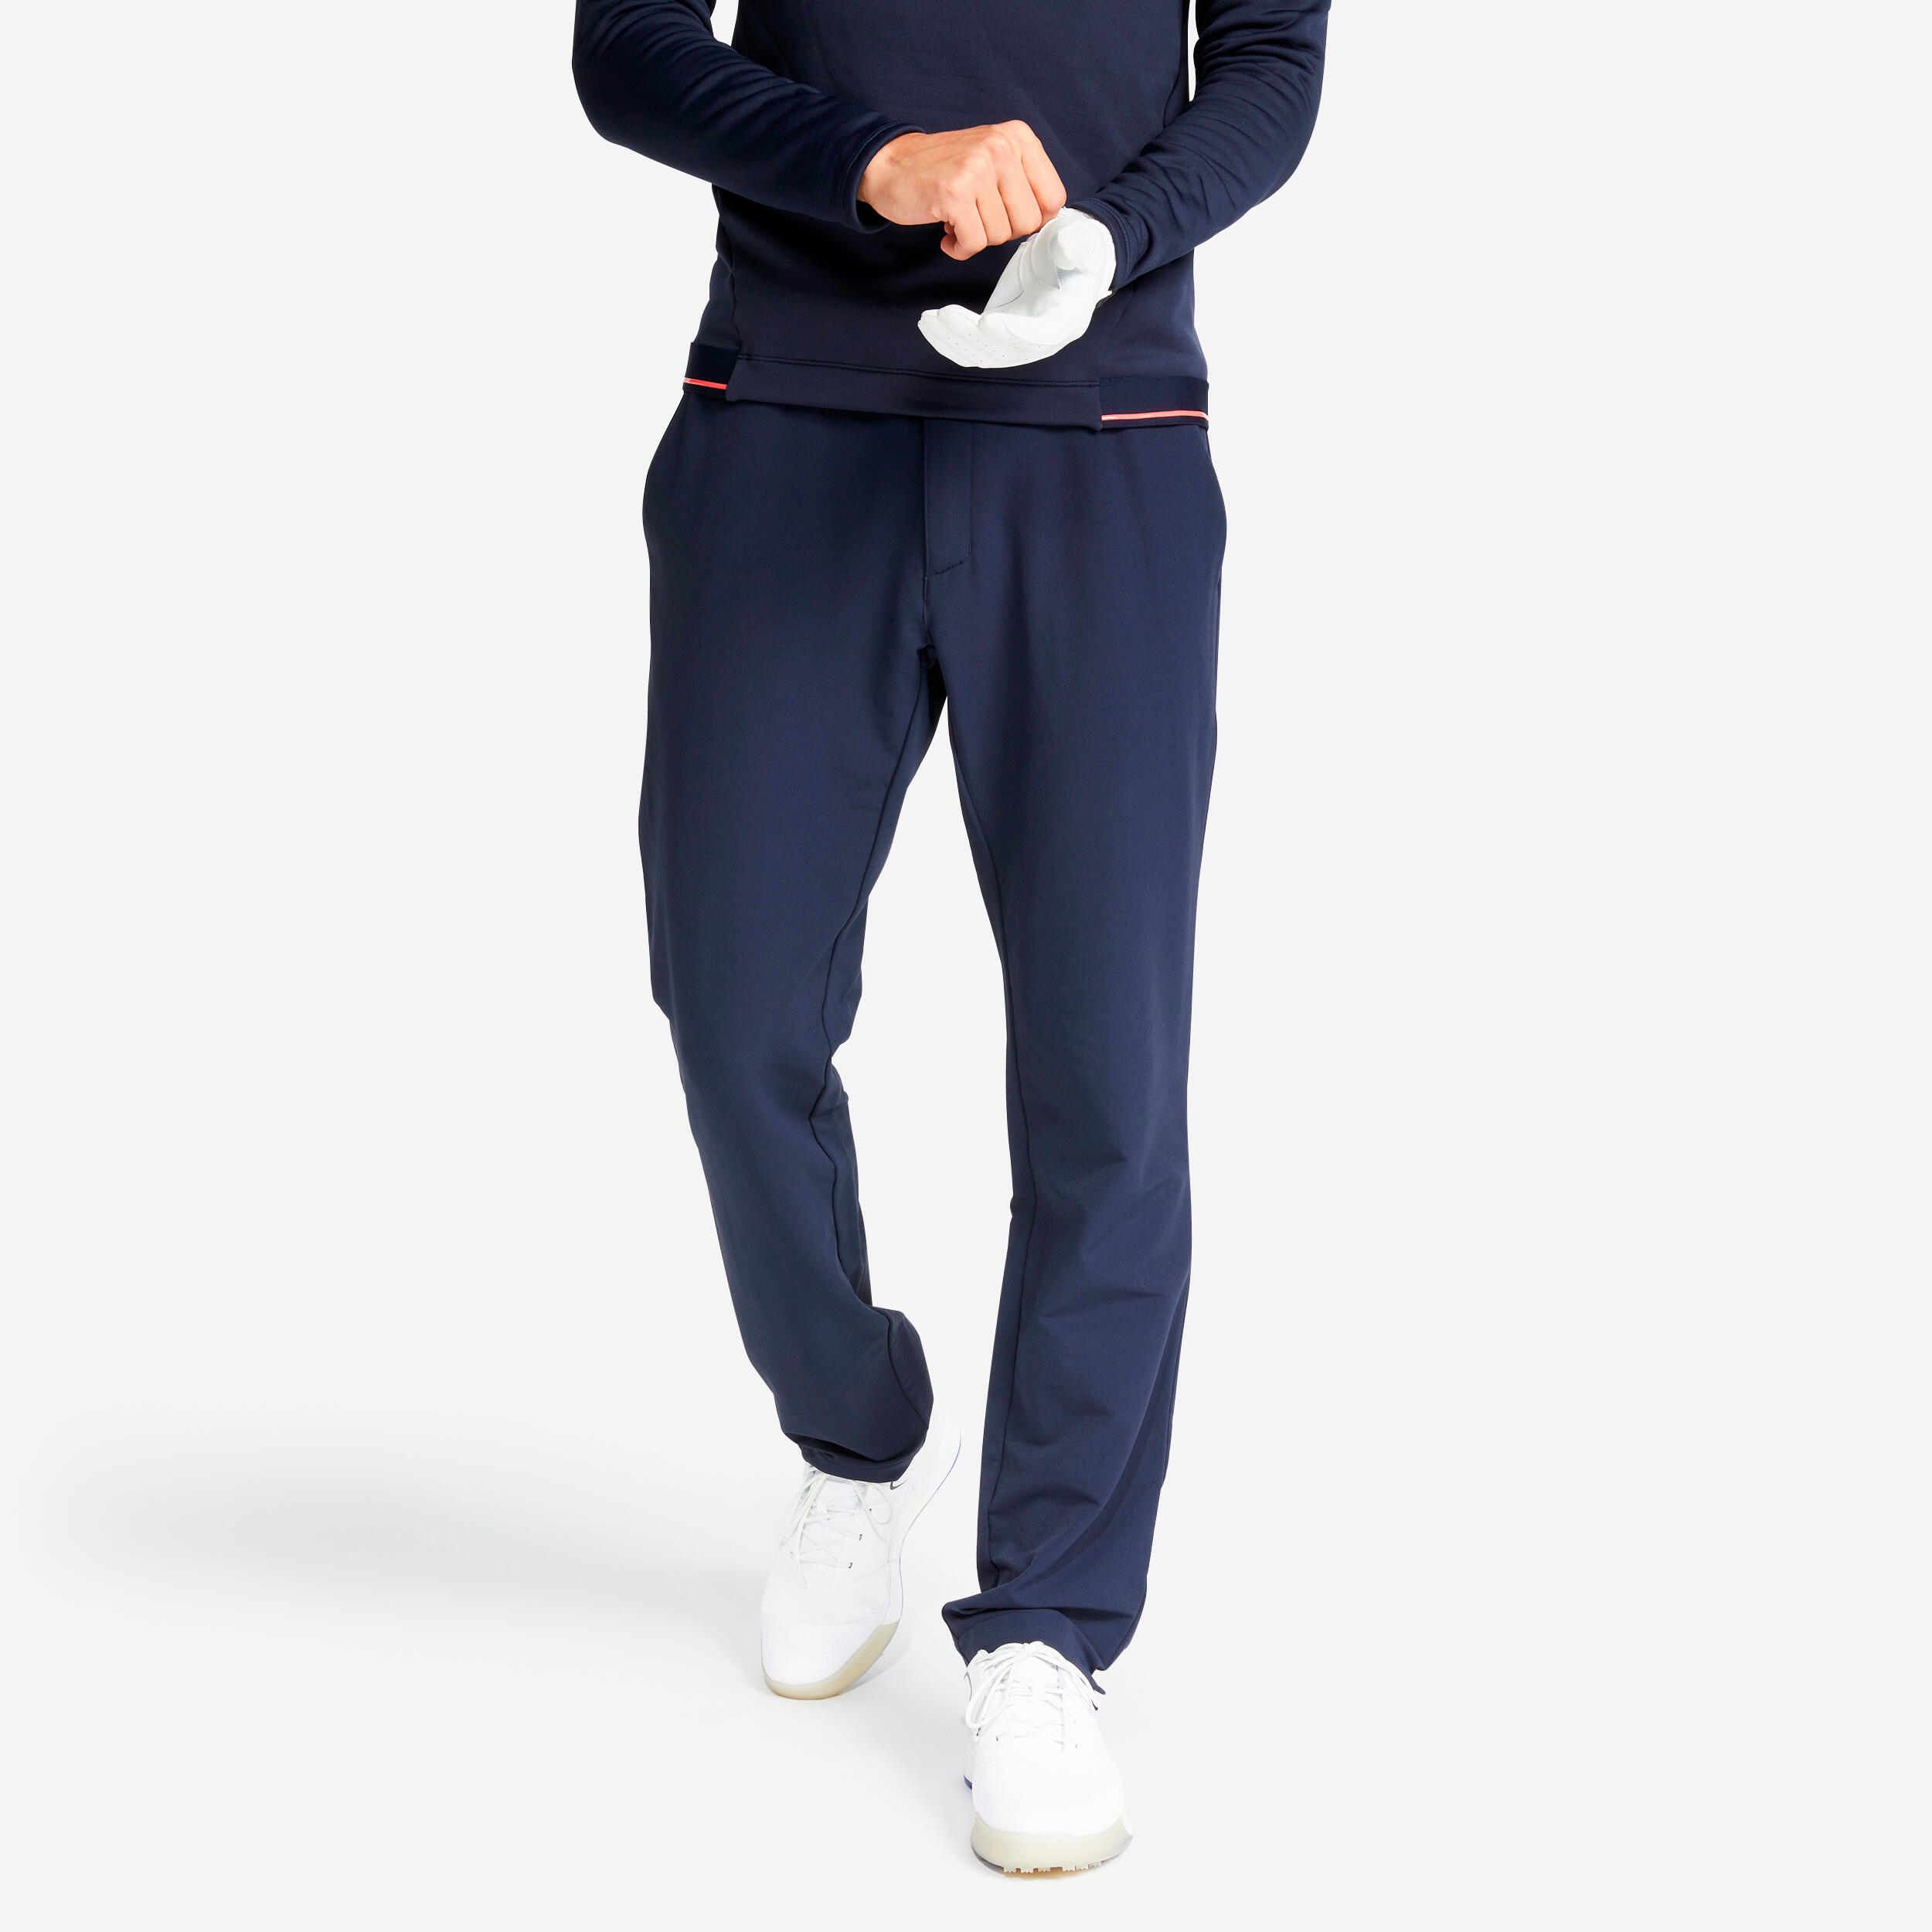 Dwyers  Co Mens Weathertec Winter Golf Trousers  Navy  3633   Amazoncouk Fashion